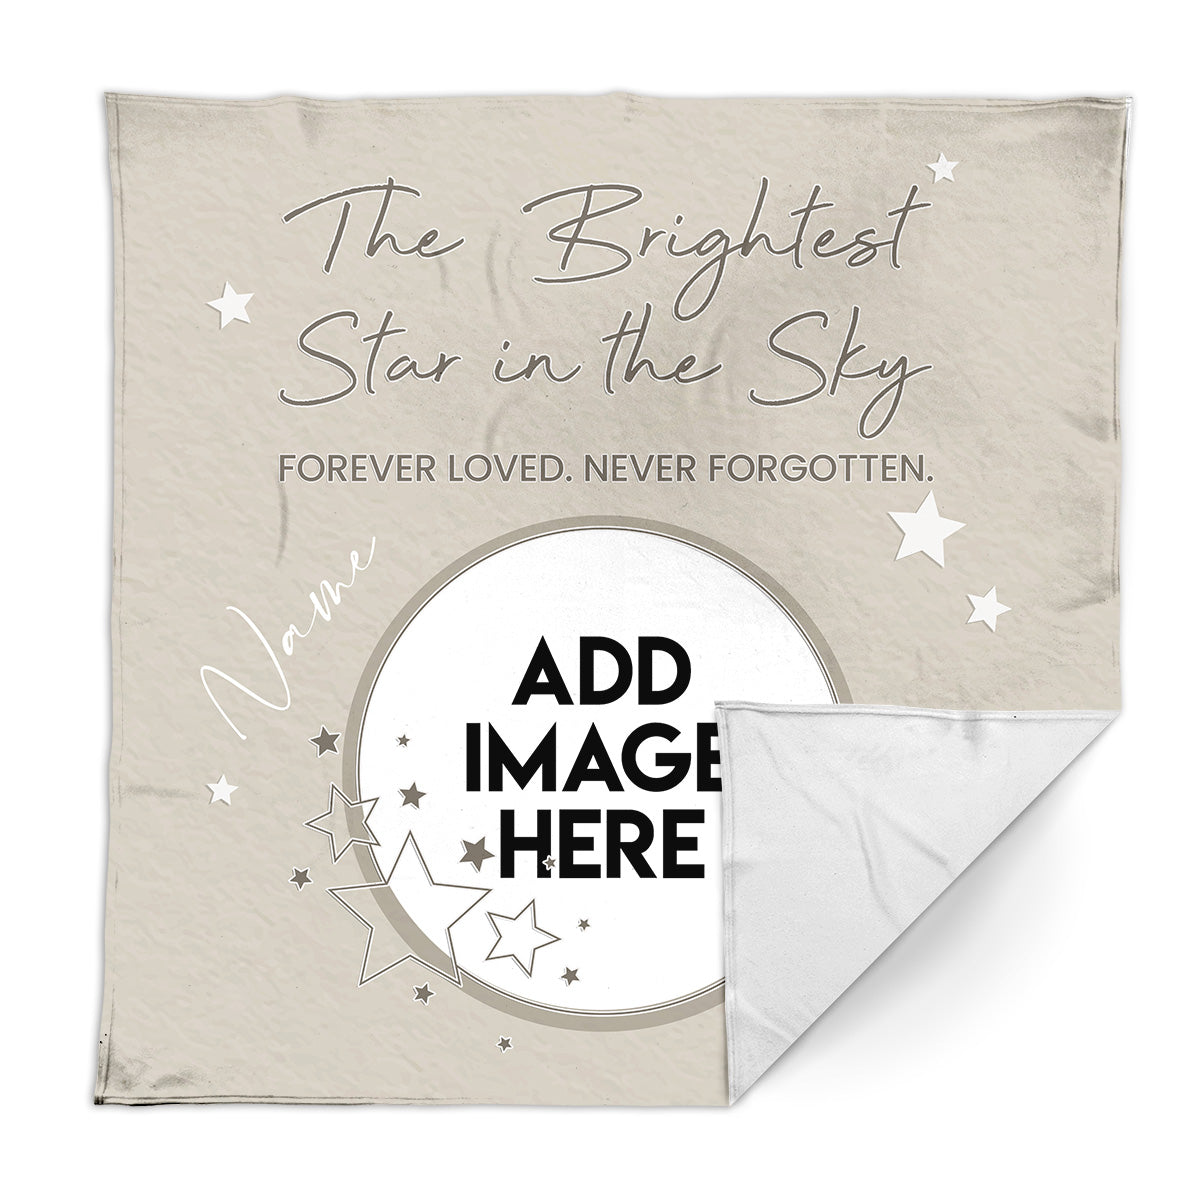 Brightest Star - Fleece - Personalised Memory Fleece Blanket 150cm X 150cm